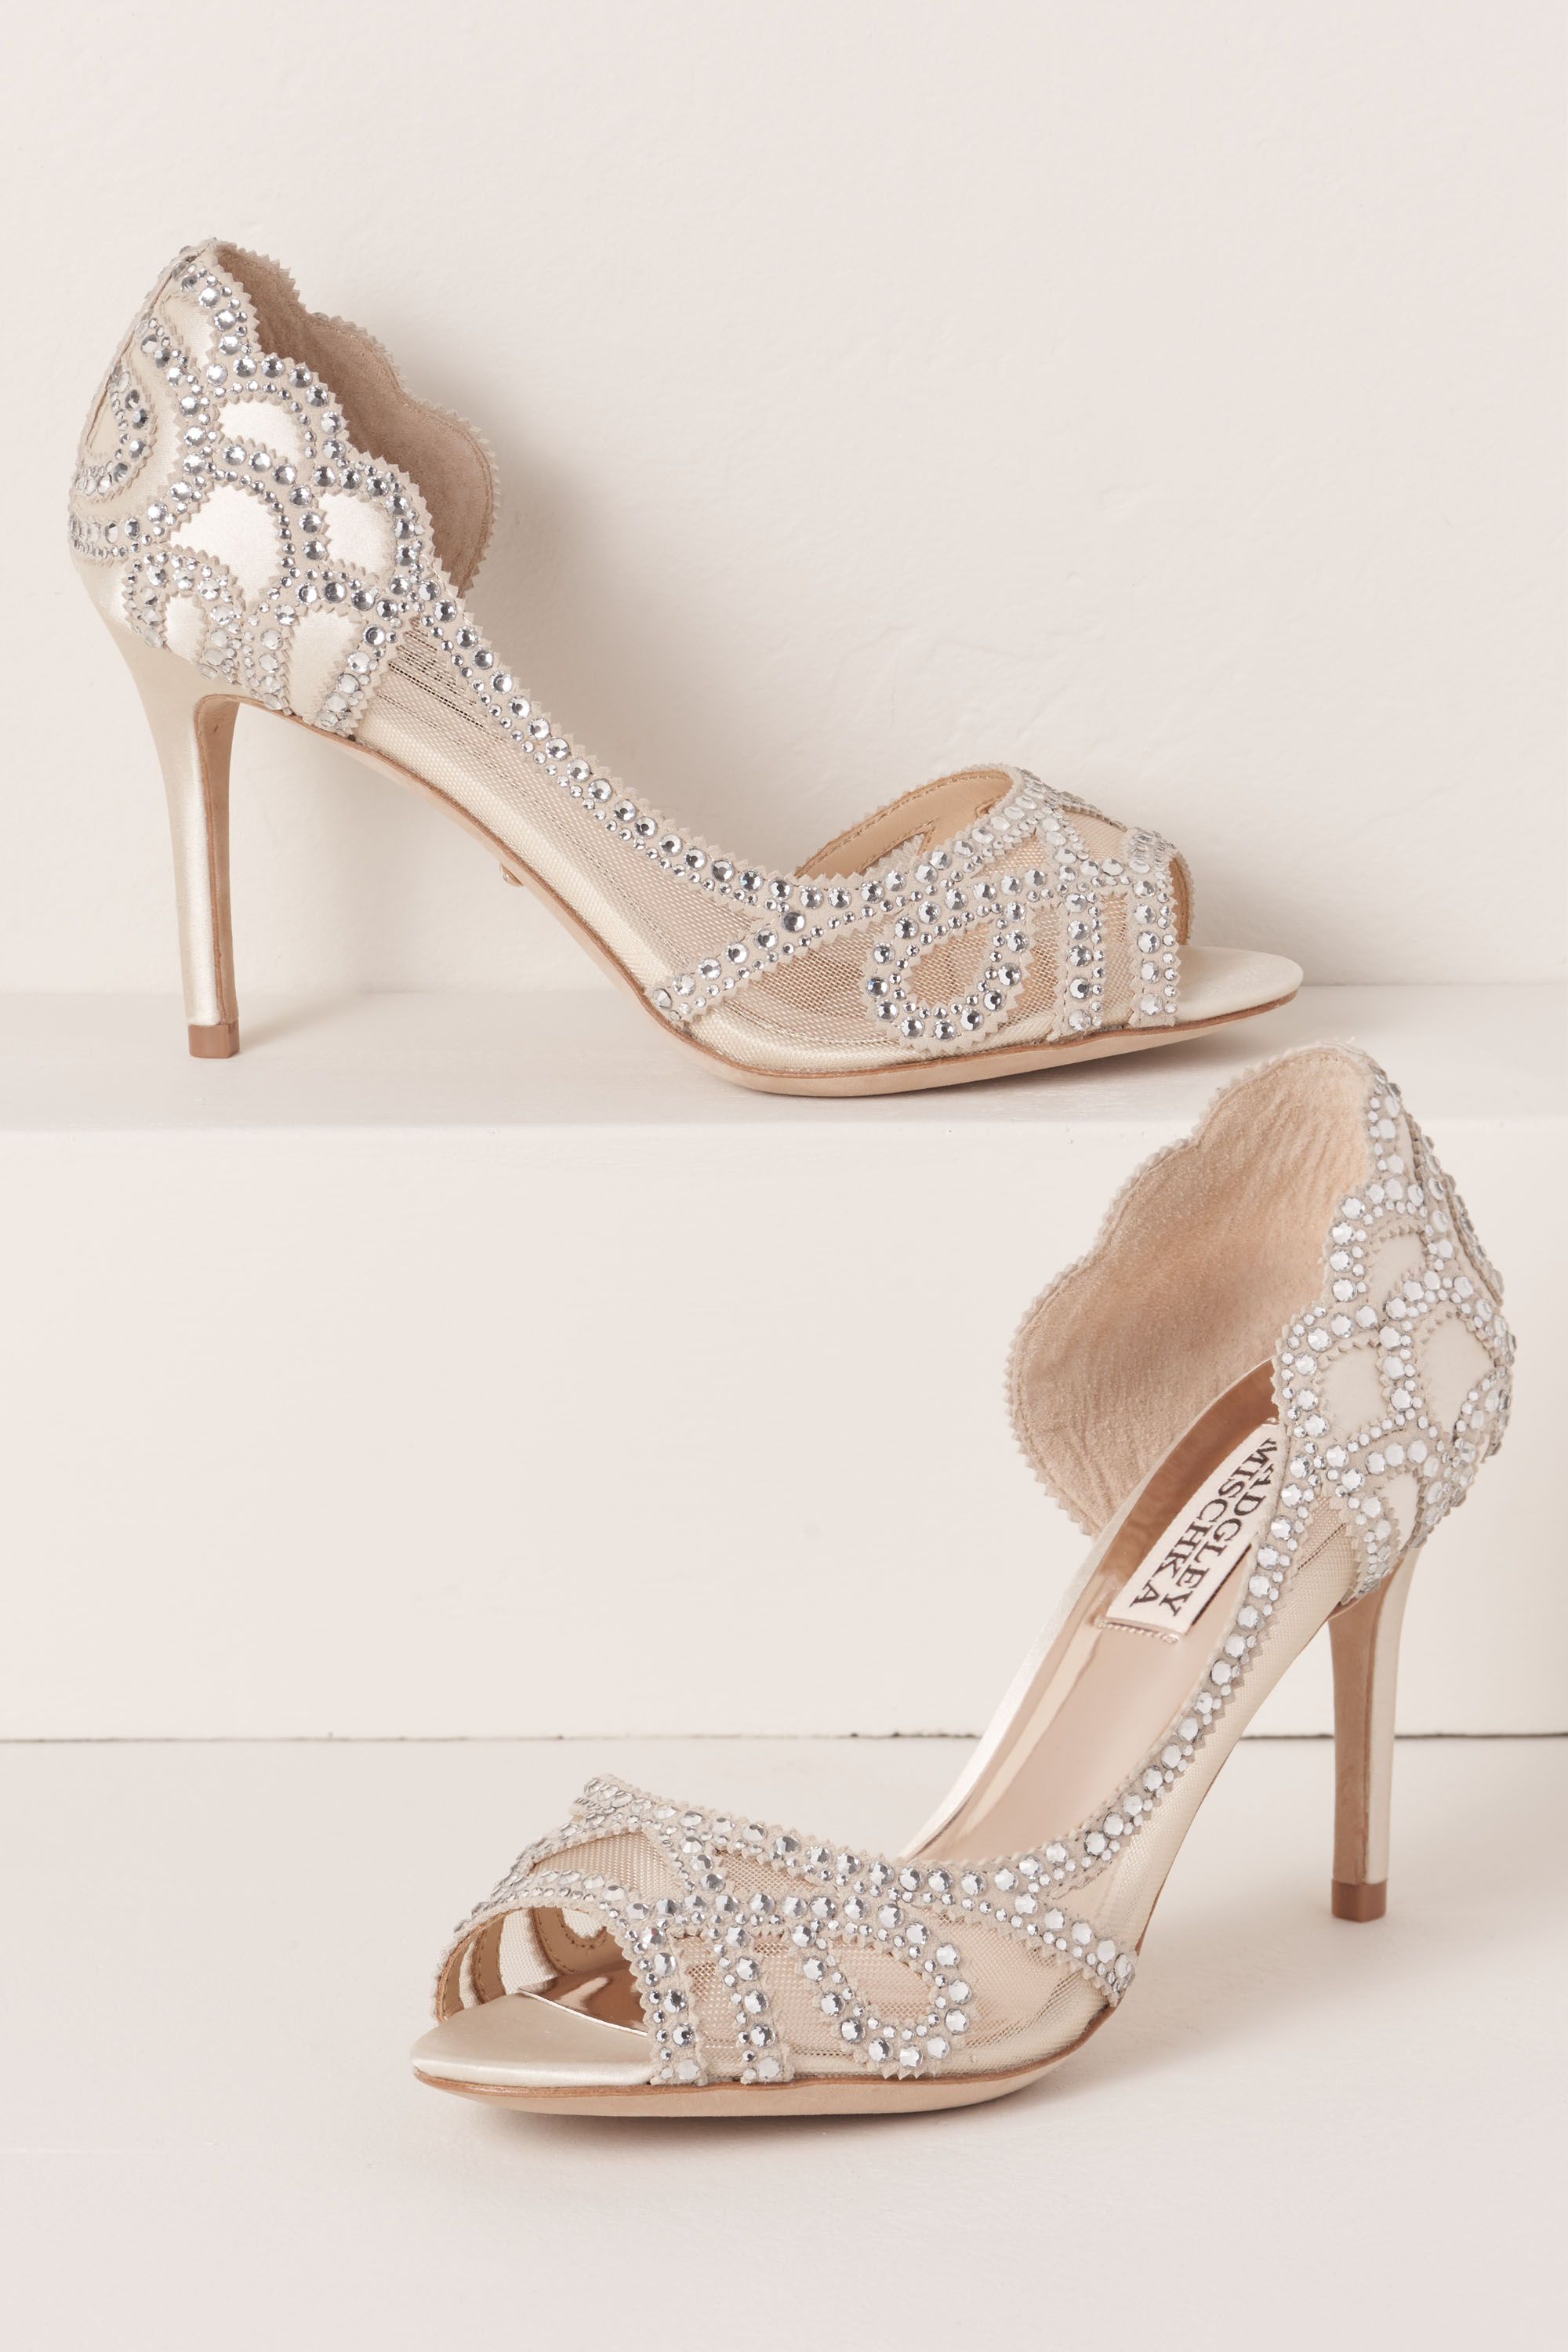 Marla Peep-Toe Heels Ivory in Shoes & Accessories | BHLDN